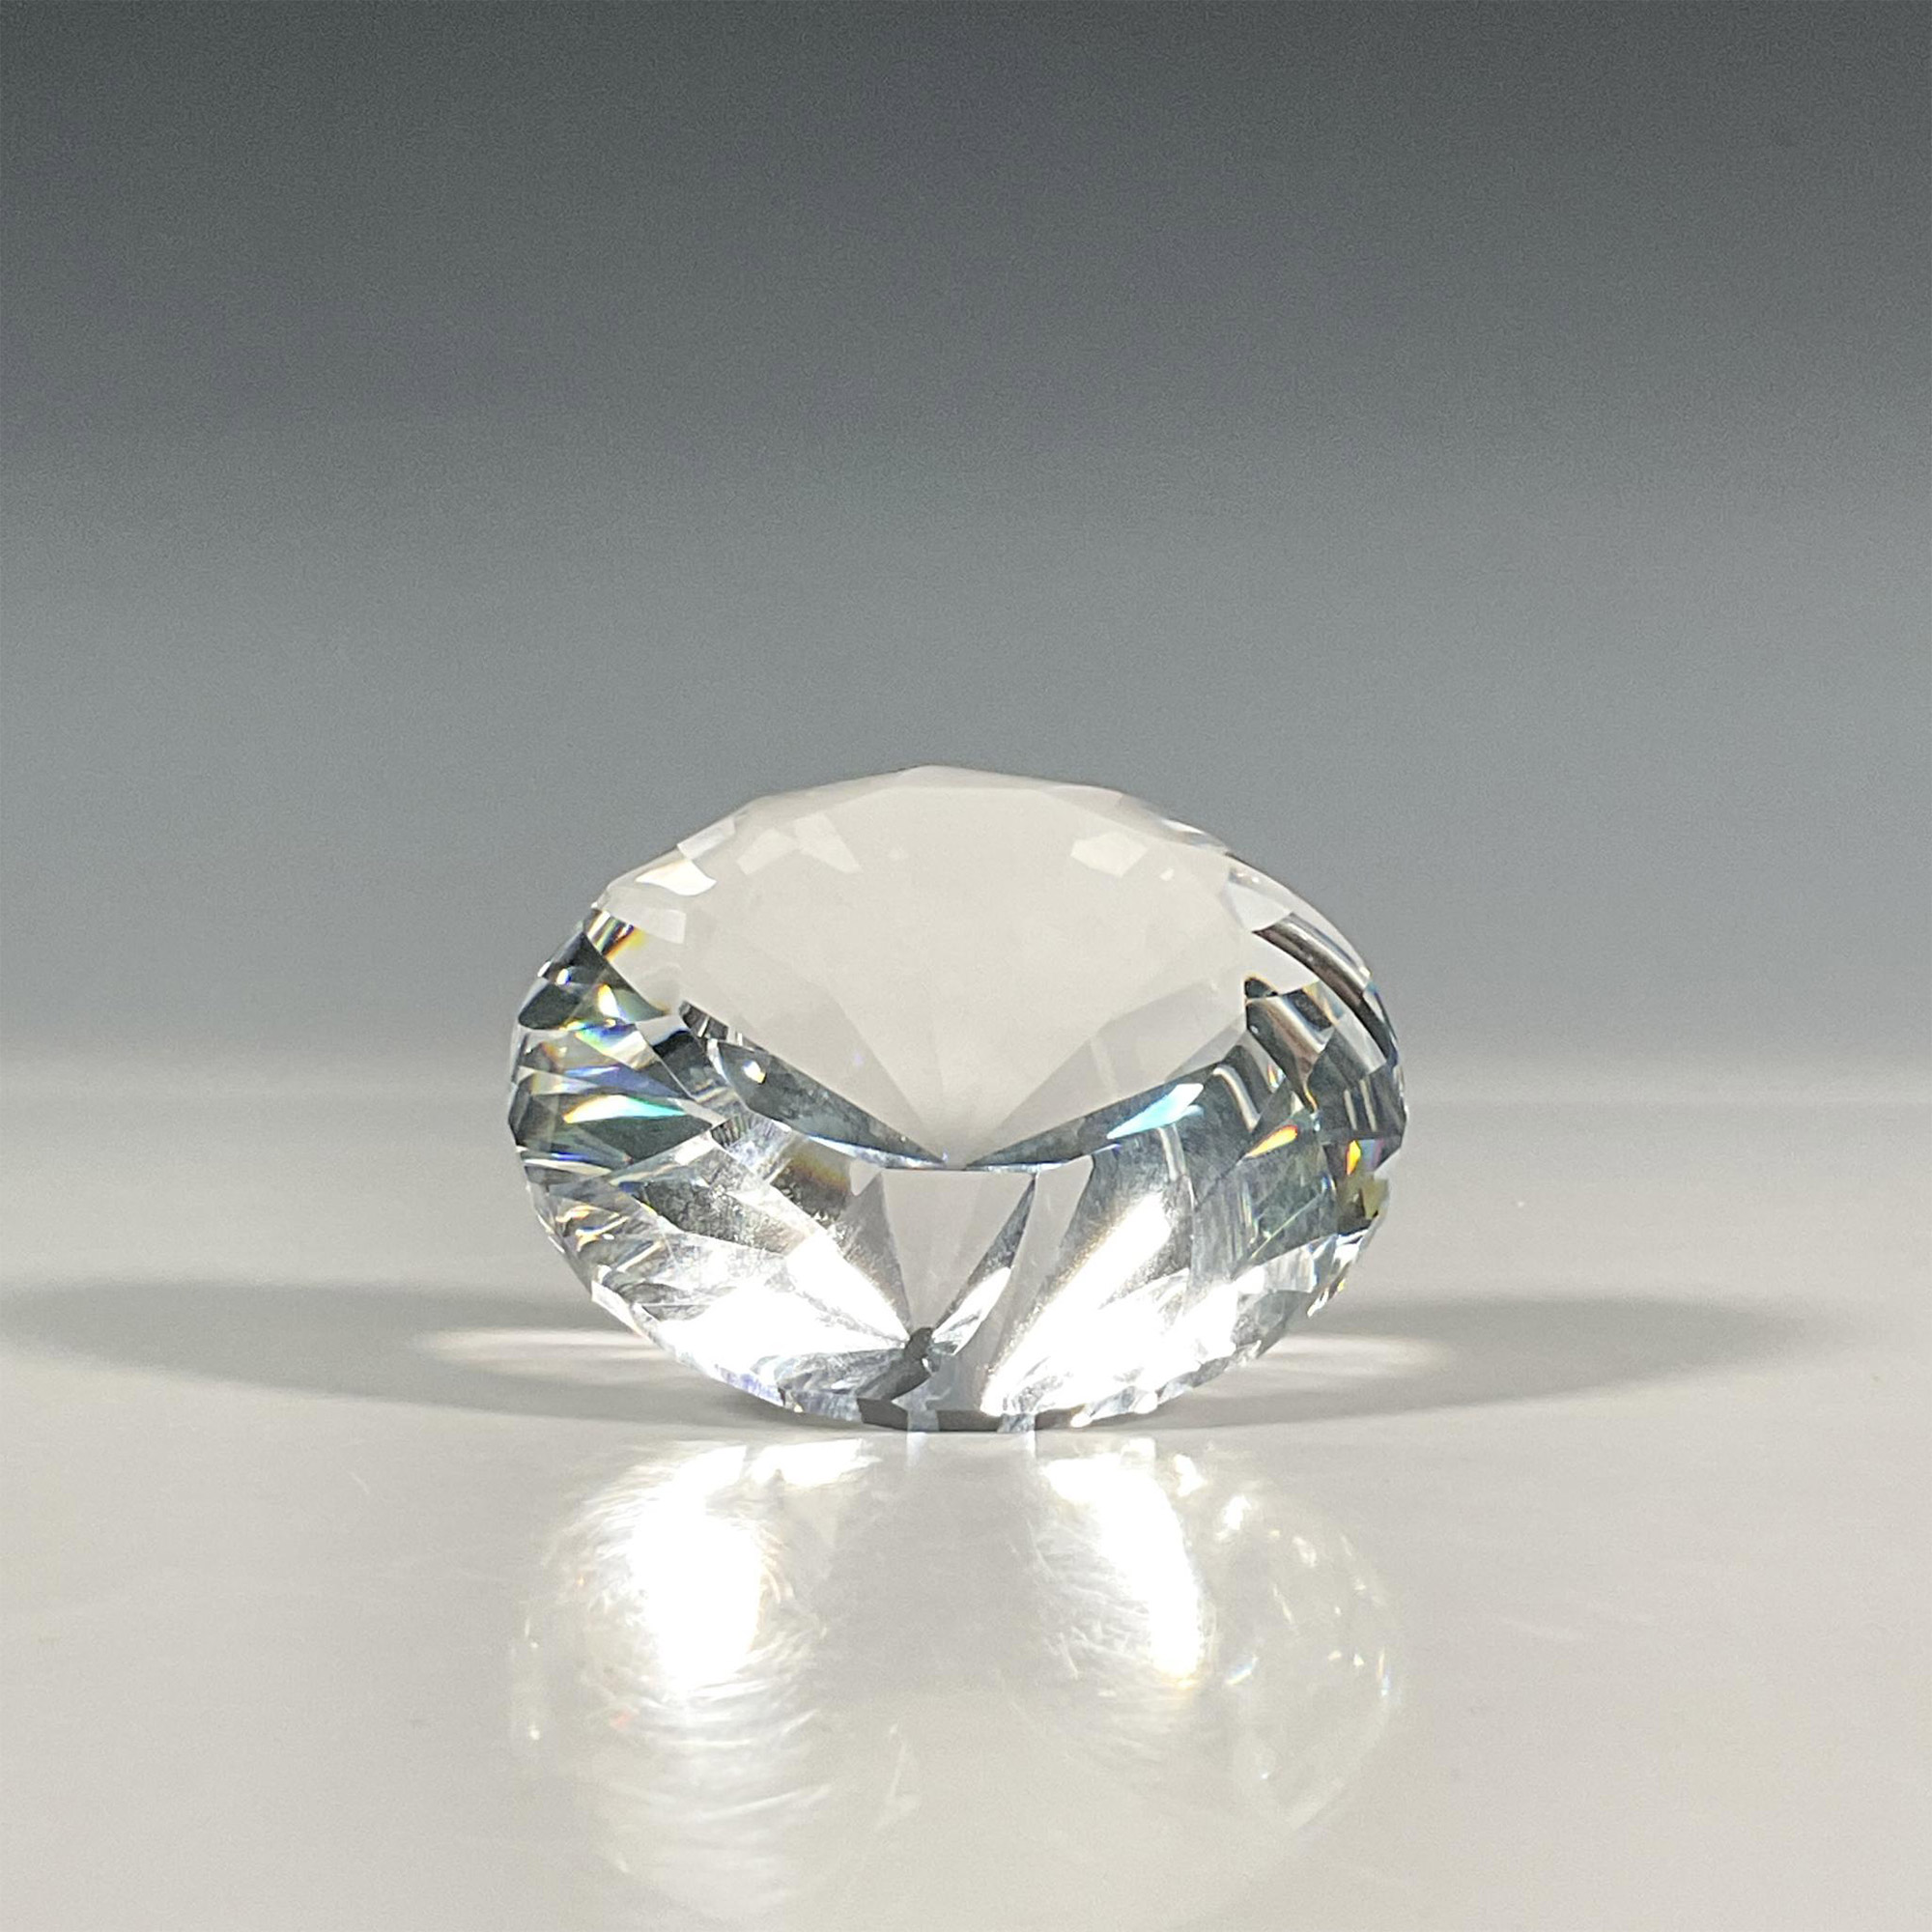 Swarovski Crystal Paperweight, Small Chaton - Image 3 of 6